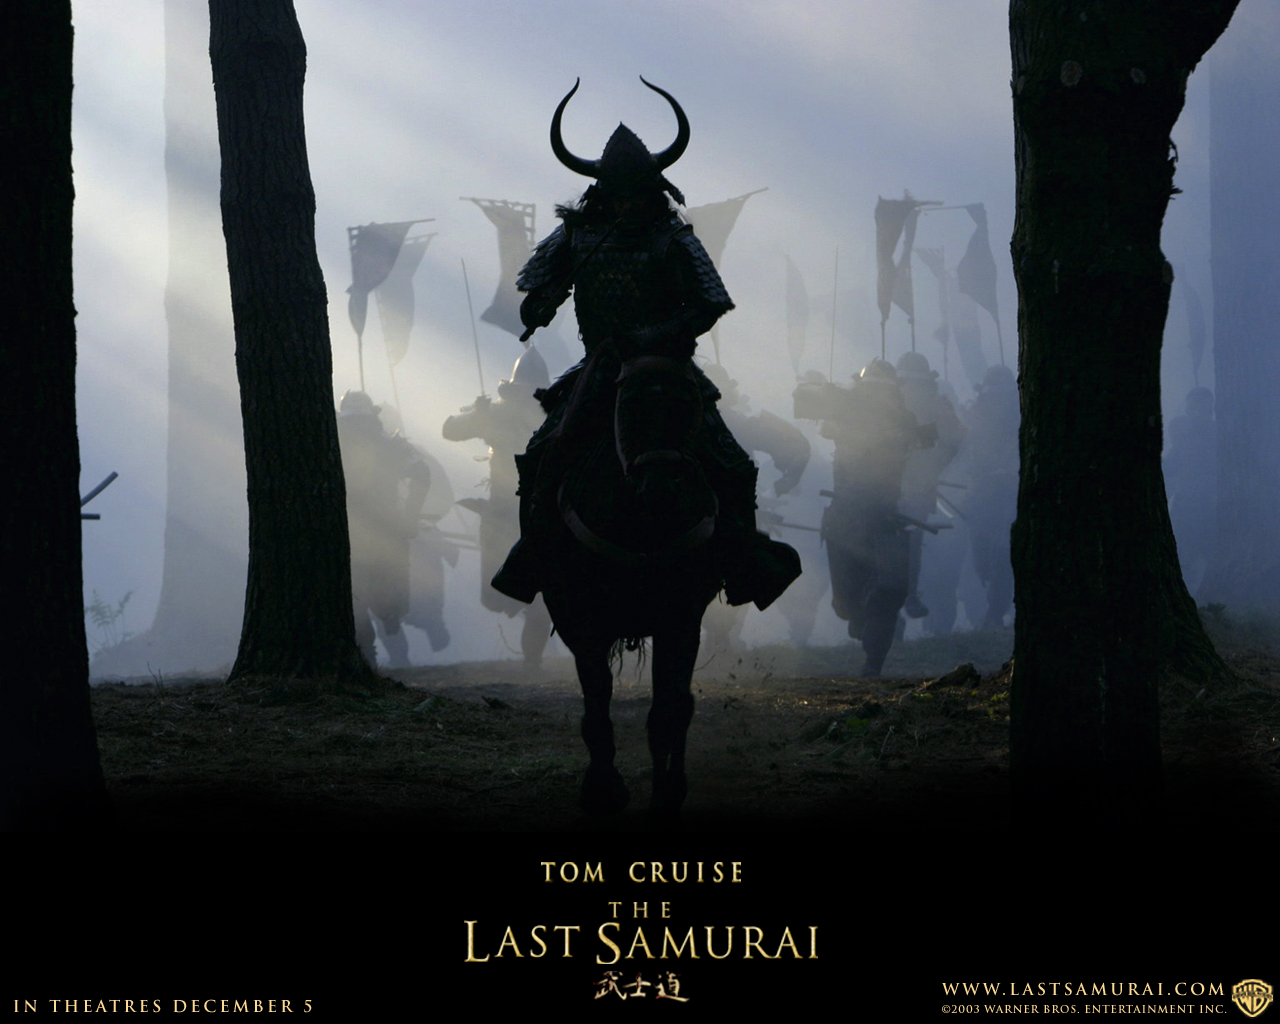 The Last Samurai HD wallpapers, Desktop wallpaper - most viewed